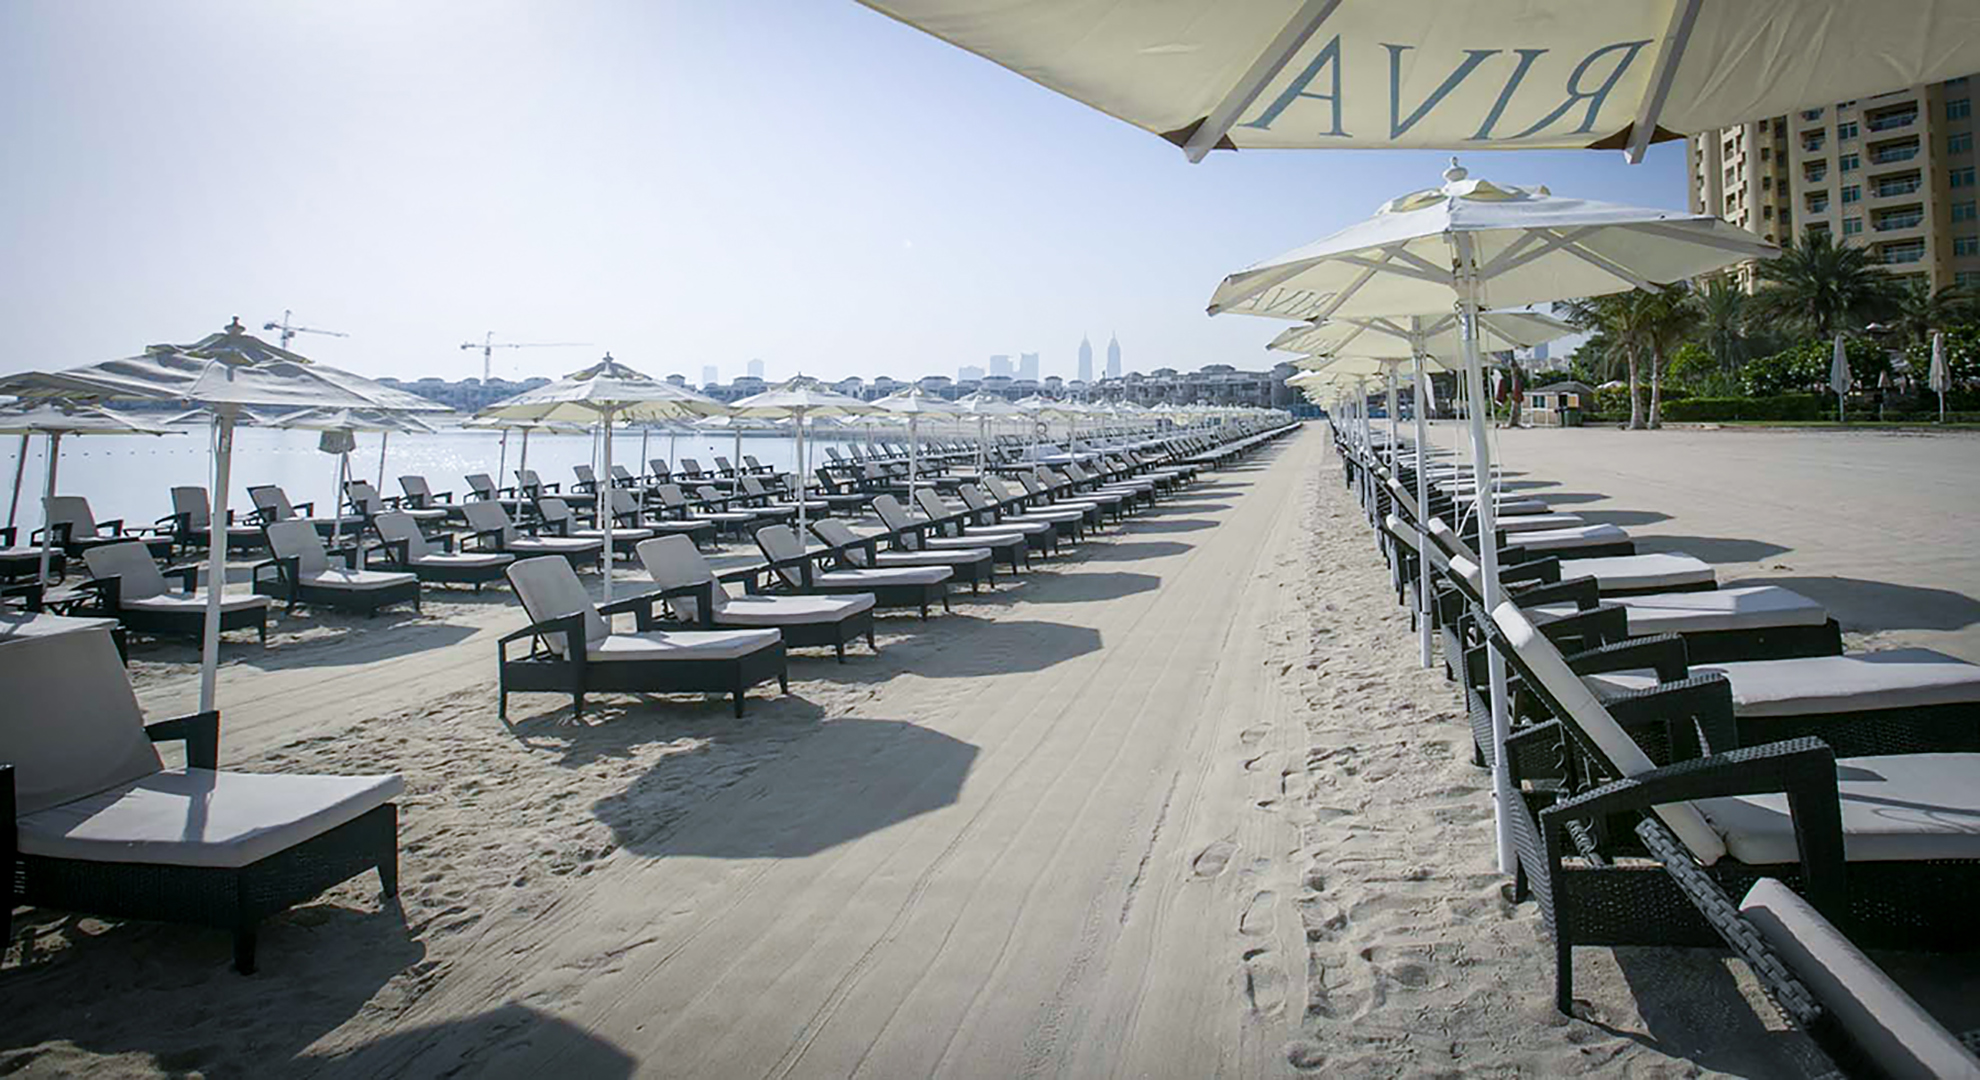 Morning desert safari with private beach and pool access in Dubai